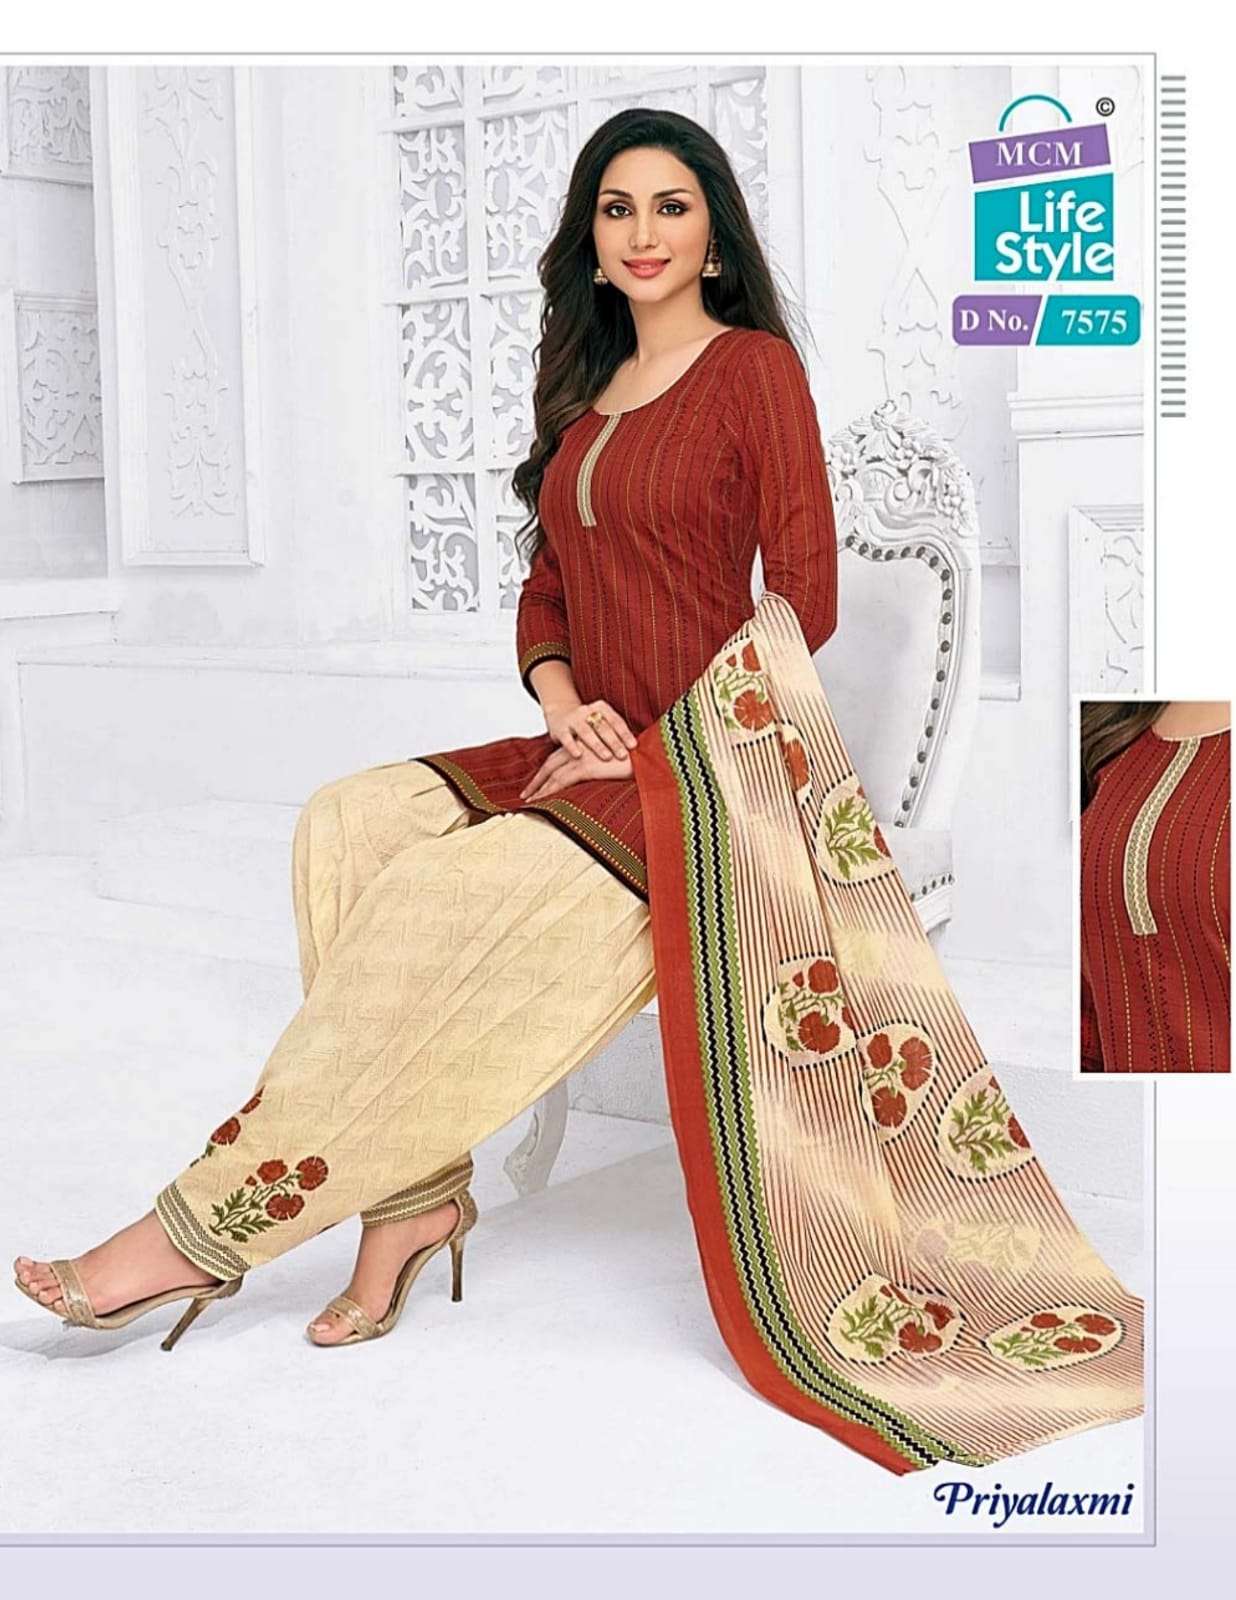 Priyalaxmi Vol 21 By Mcm Lifestyle Wholesaler Dress Materials In Surat